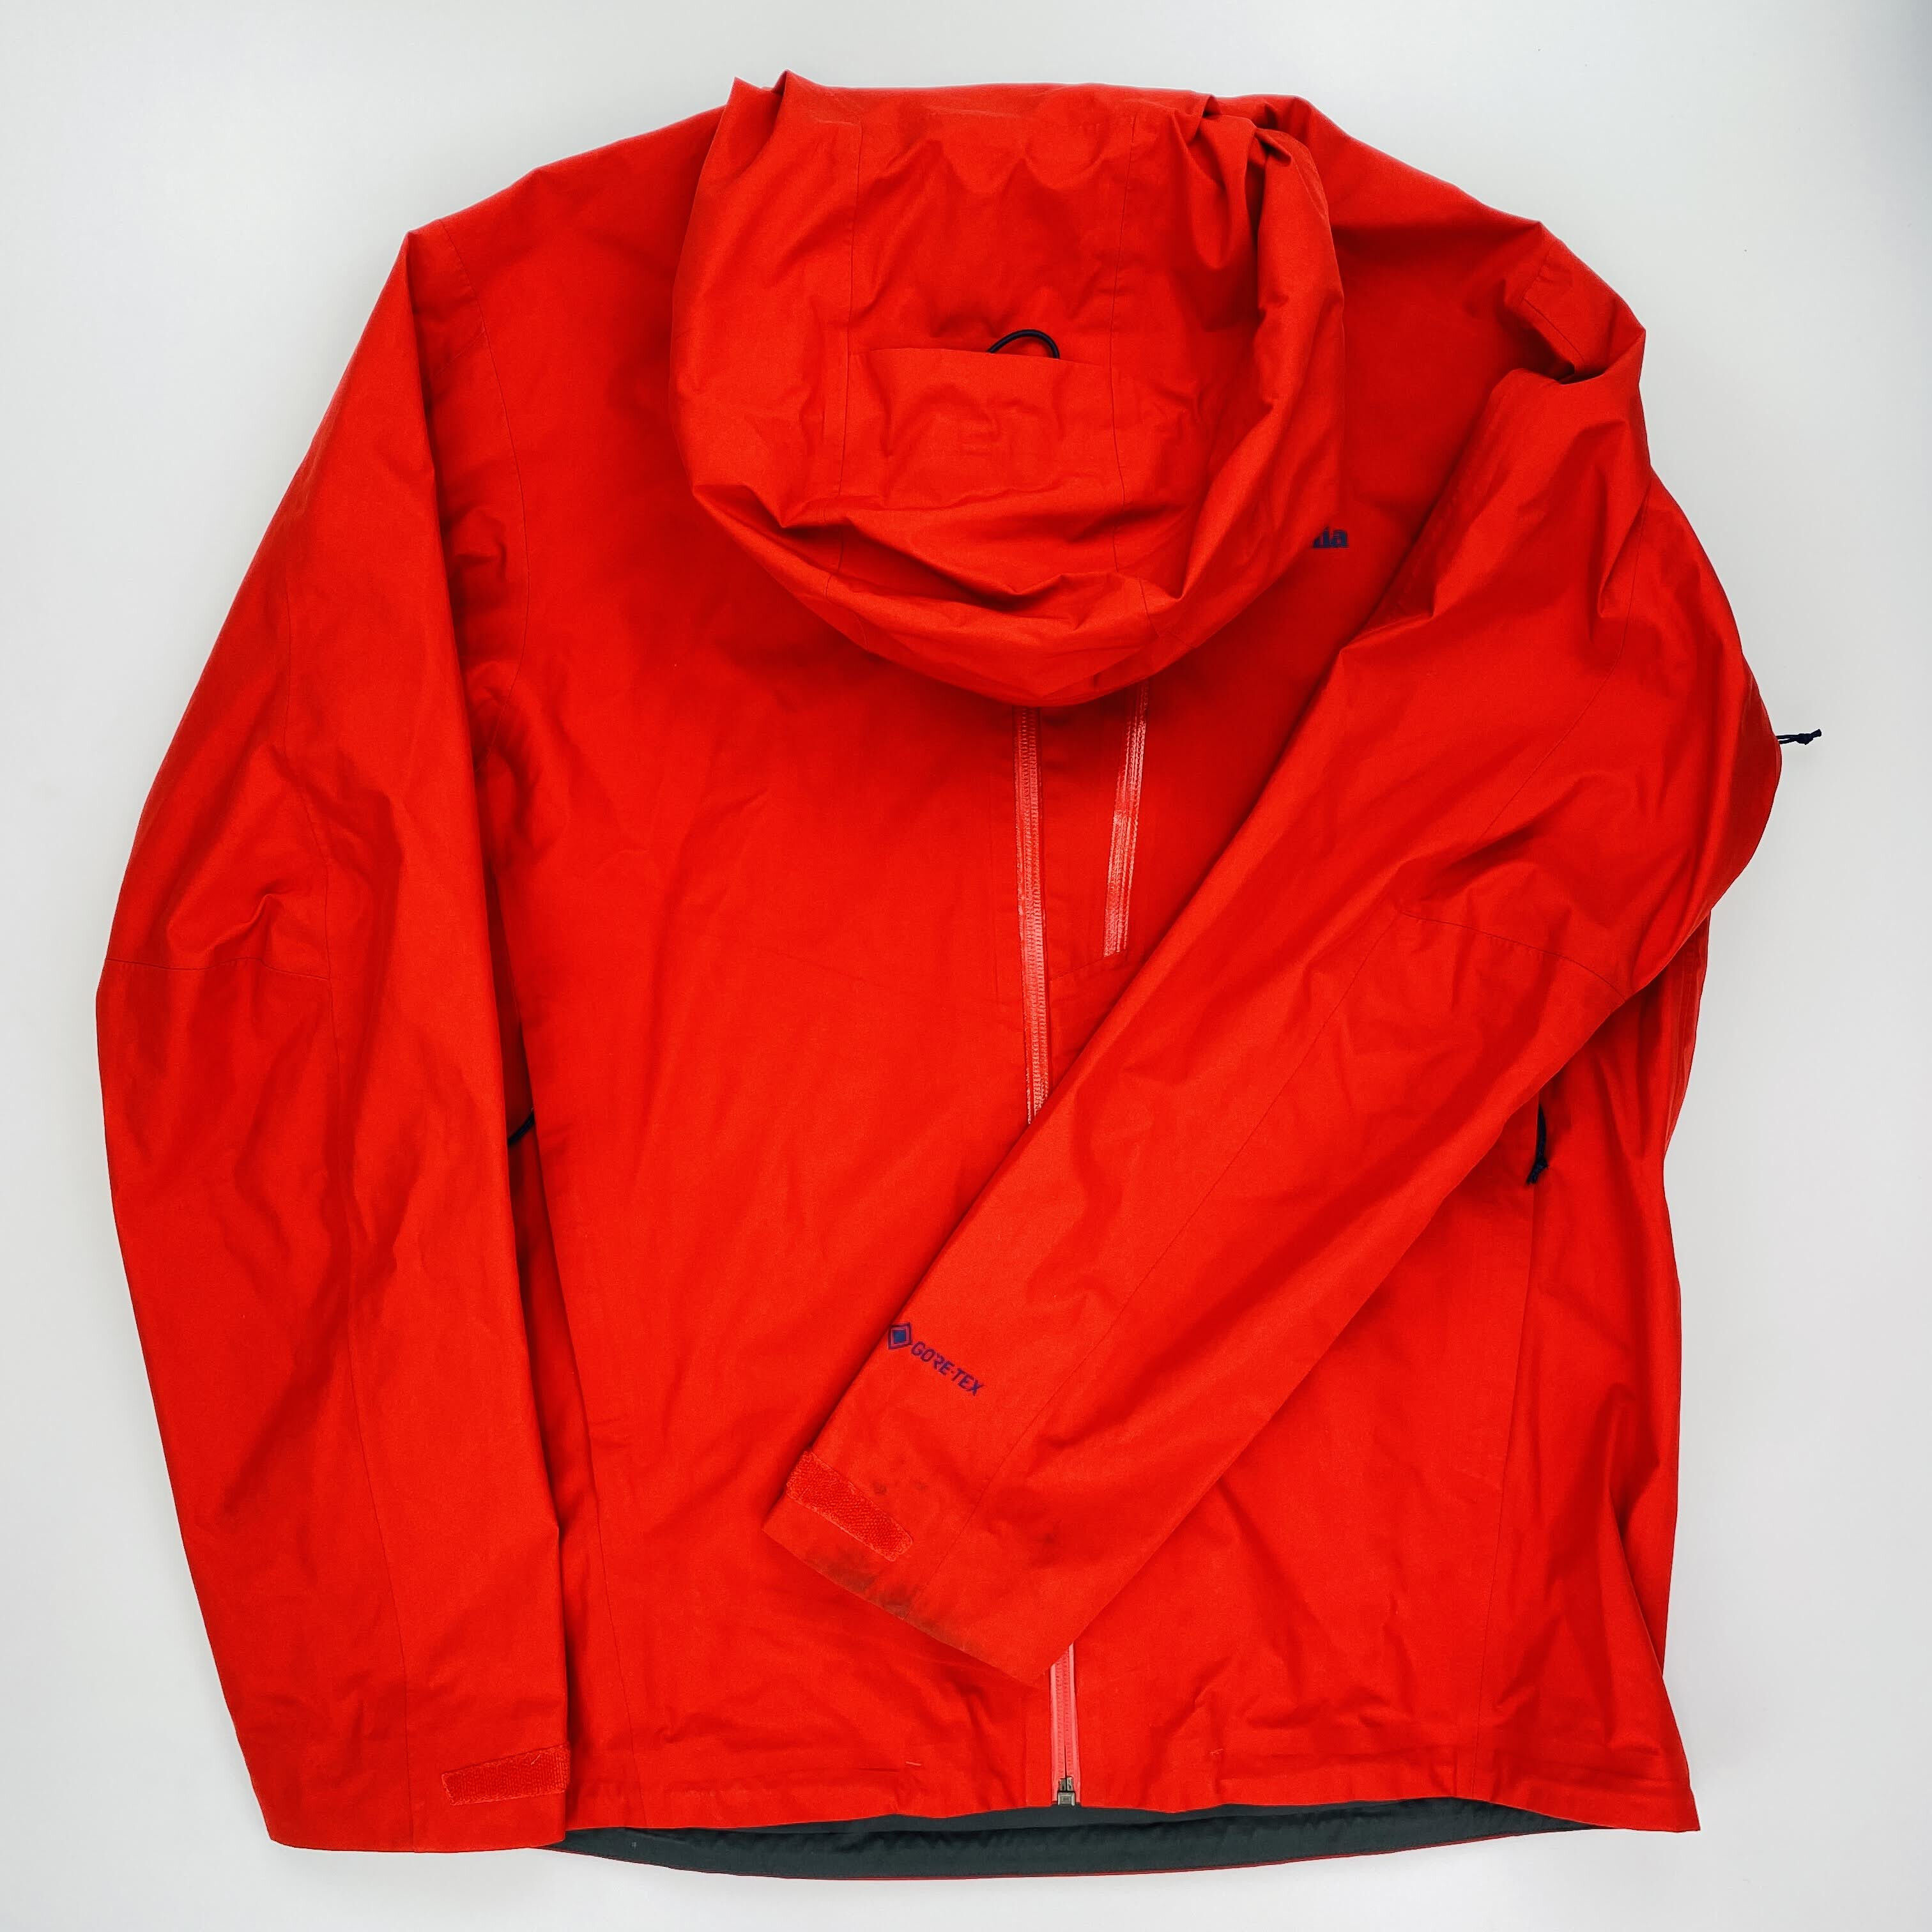 Patagonia Calcite Jacket - Seconde main Veste imperméable homme - Rouge - M | Hardloop